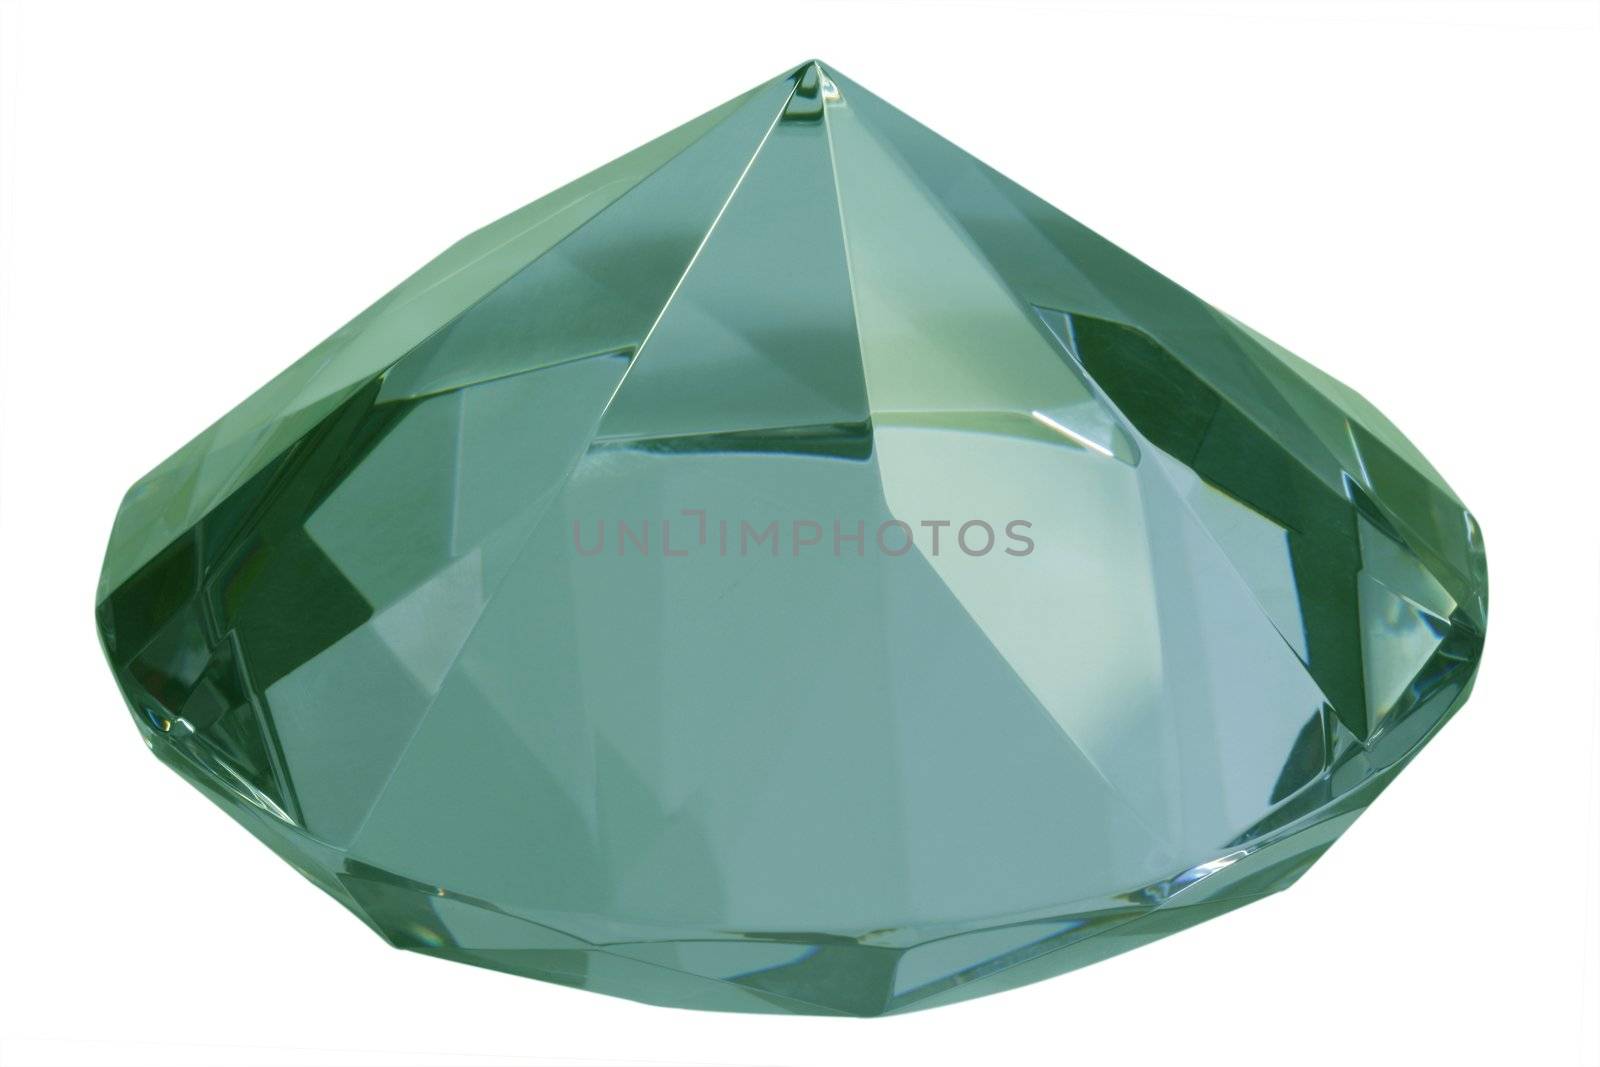 Green diamond by Teamarbeit